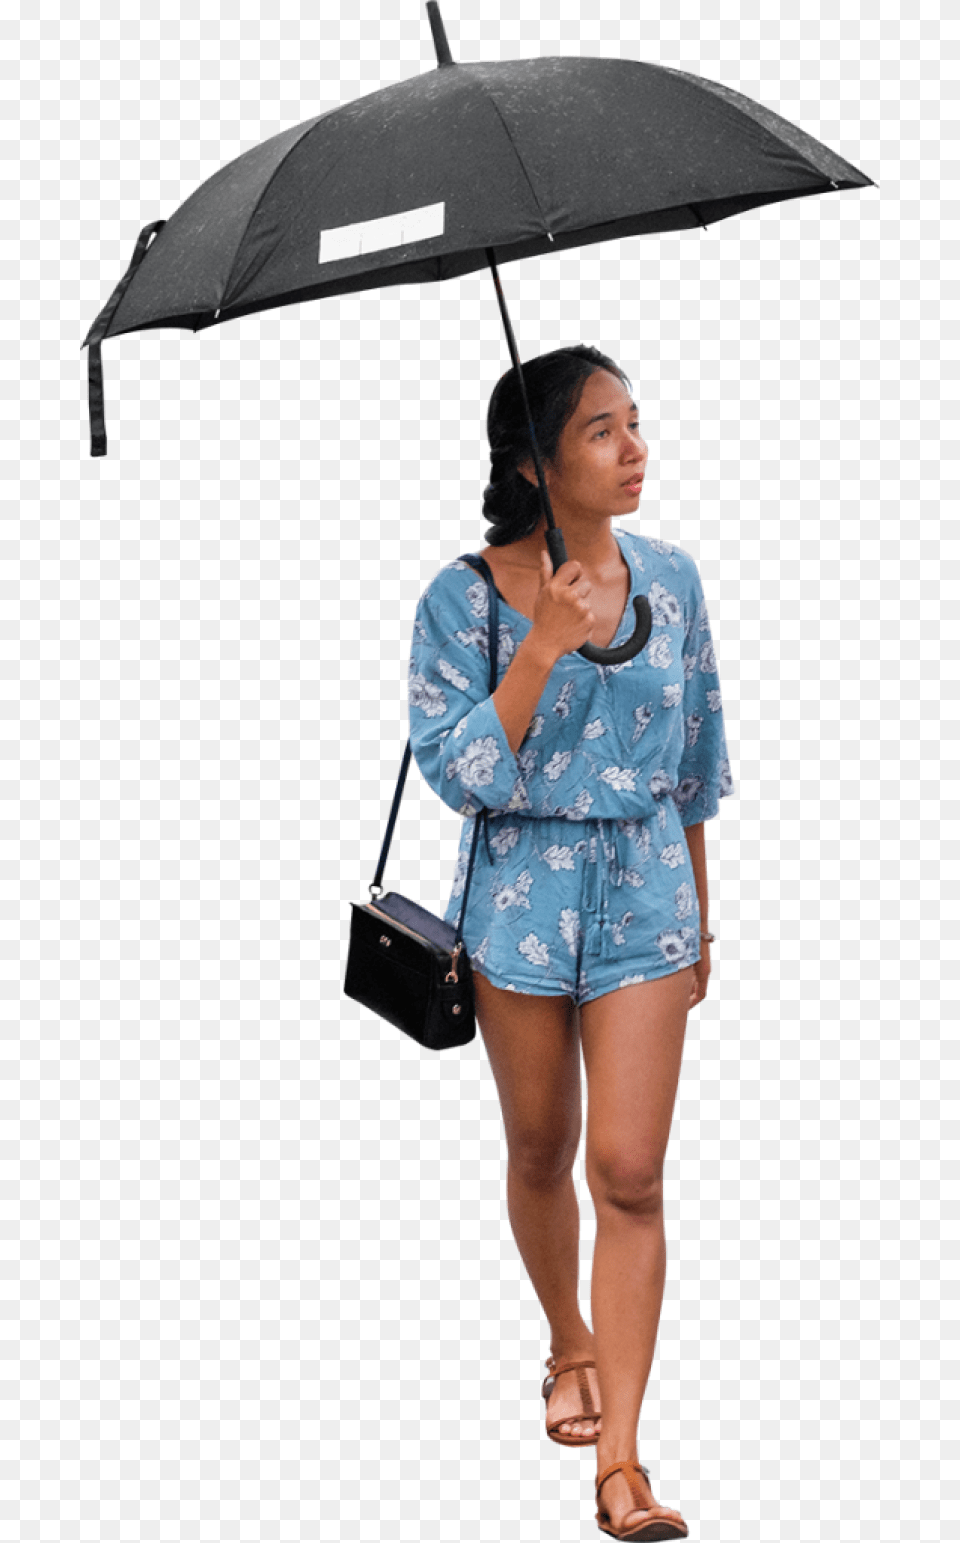 Walking In The Rain Image People Walking With Umbrella, Accessories, Purse, Bag, Handbag Free Transparent Png